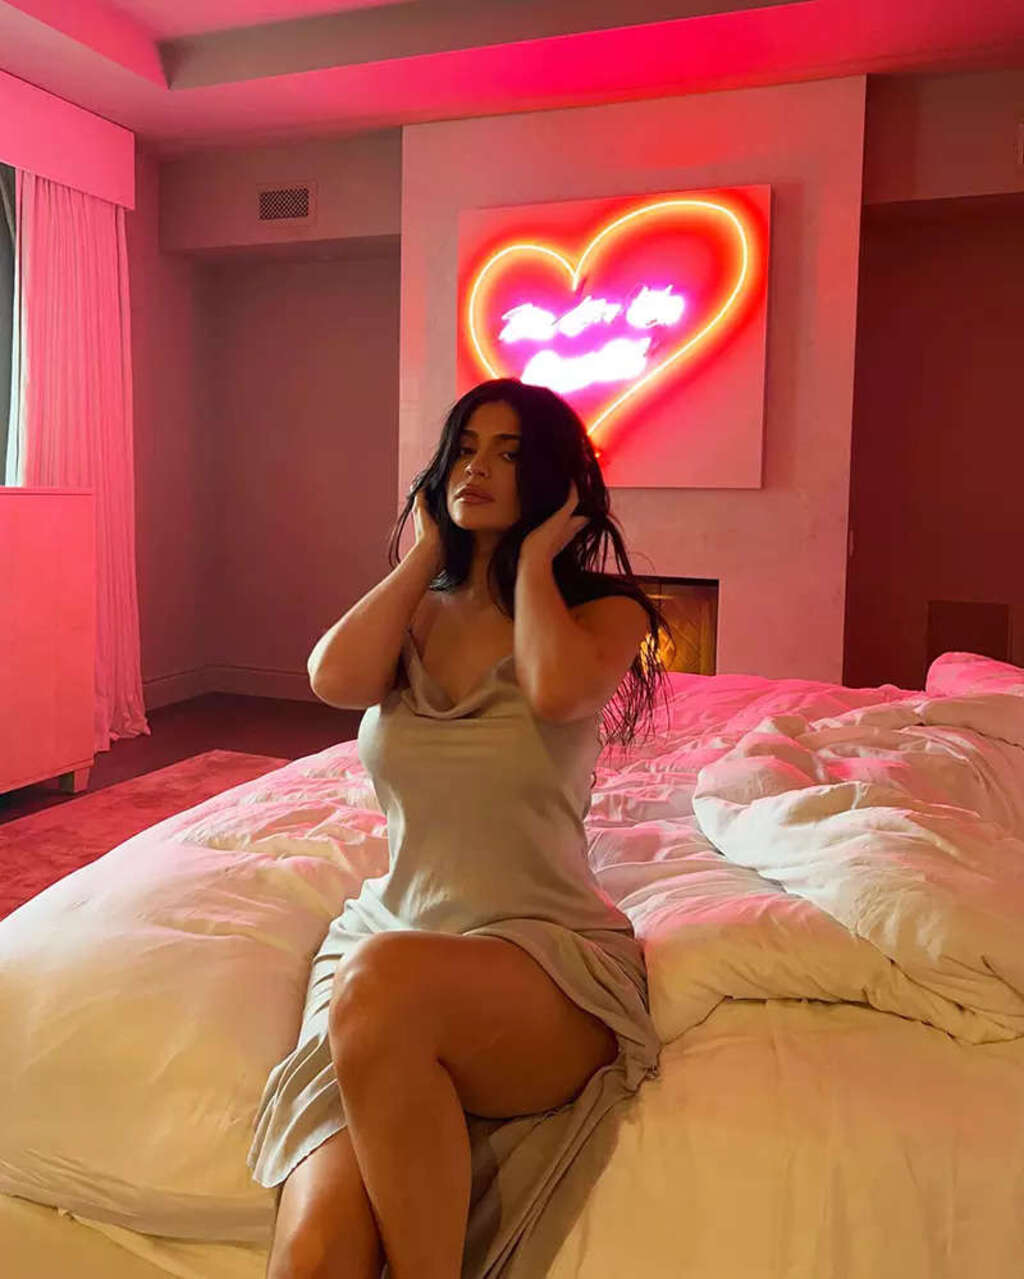 Kylie Jenner's bedroom photos go viral